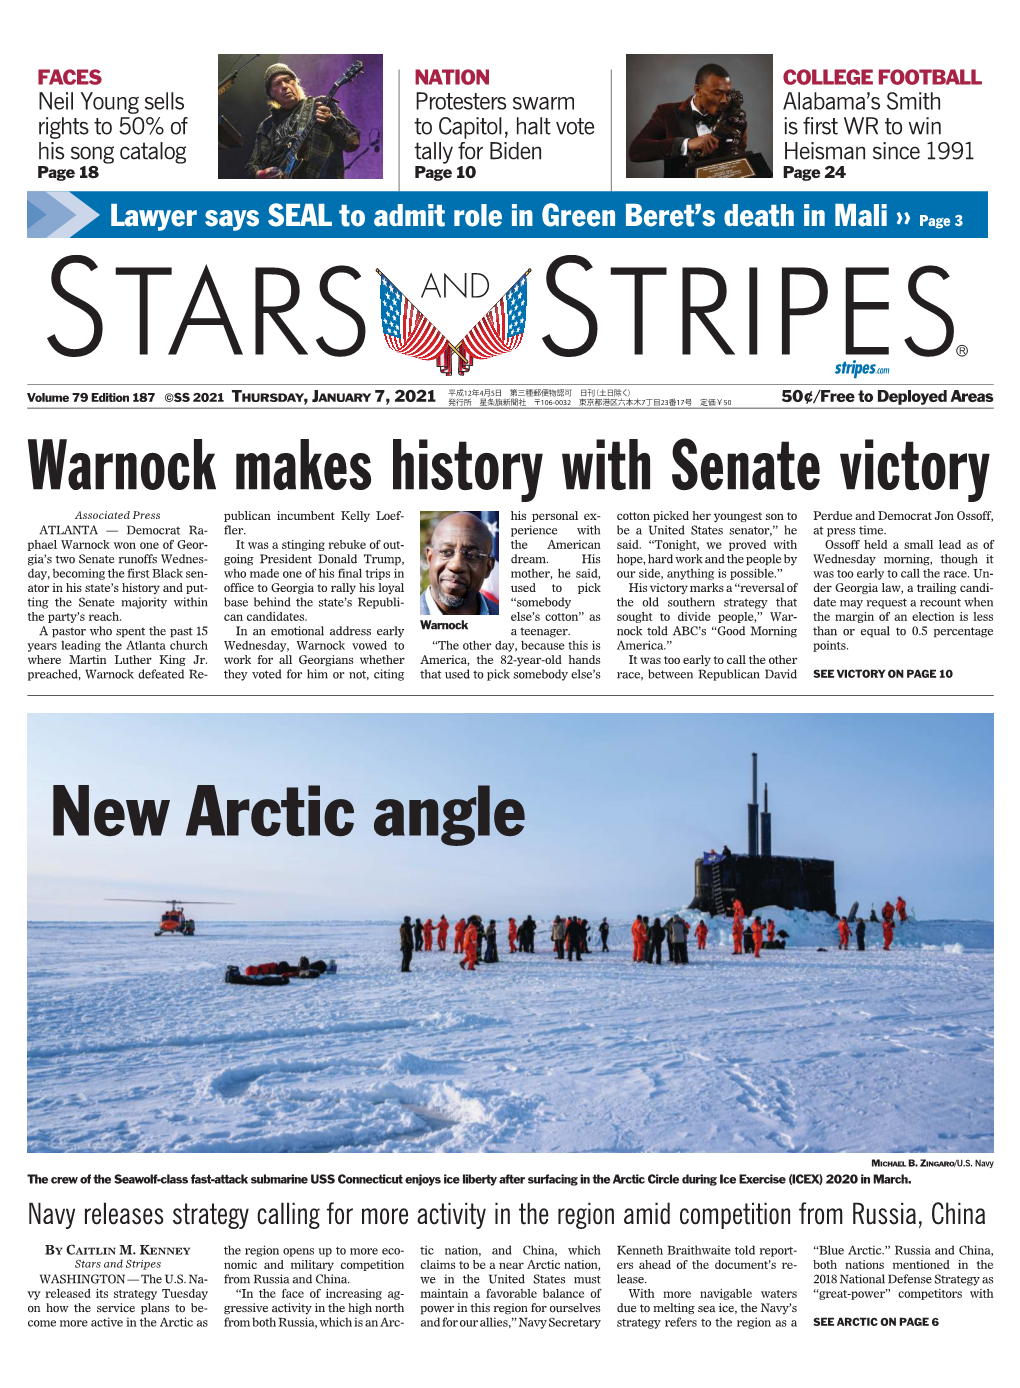 Warnock Makes History with Senate Victory New Arctic Angle